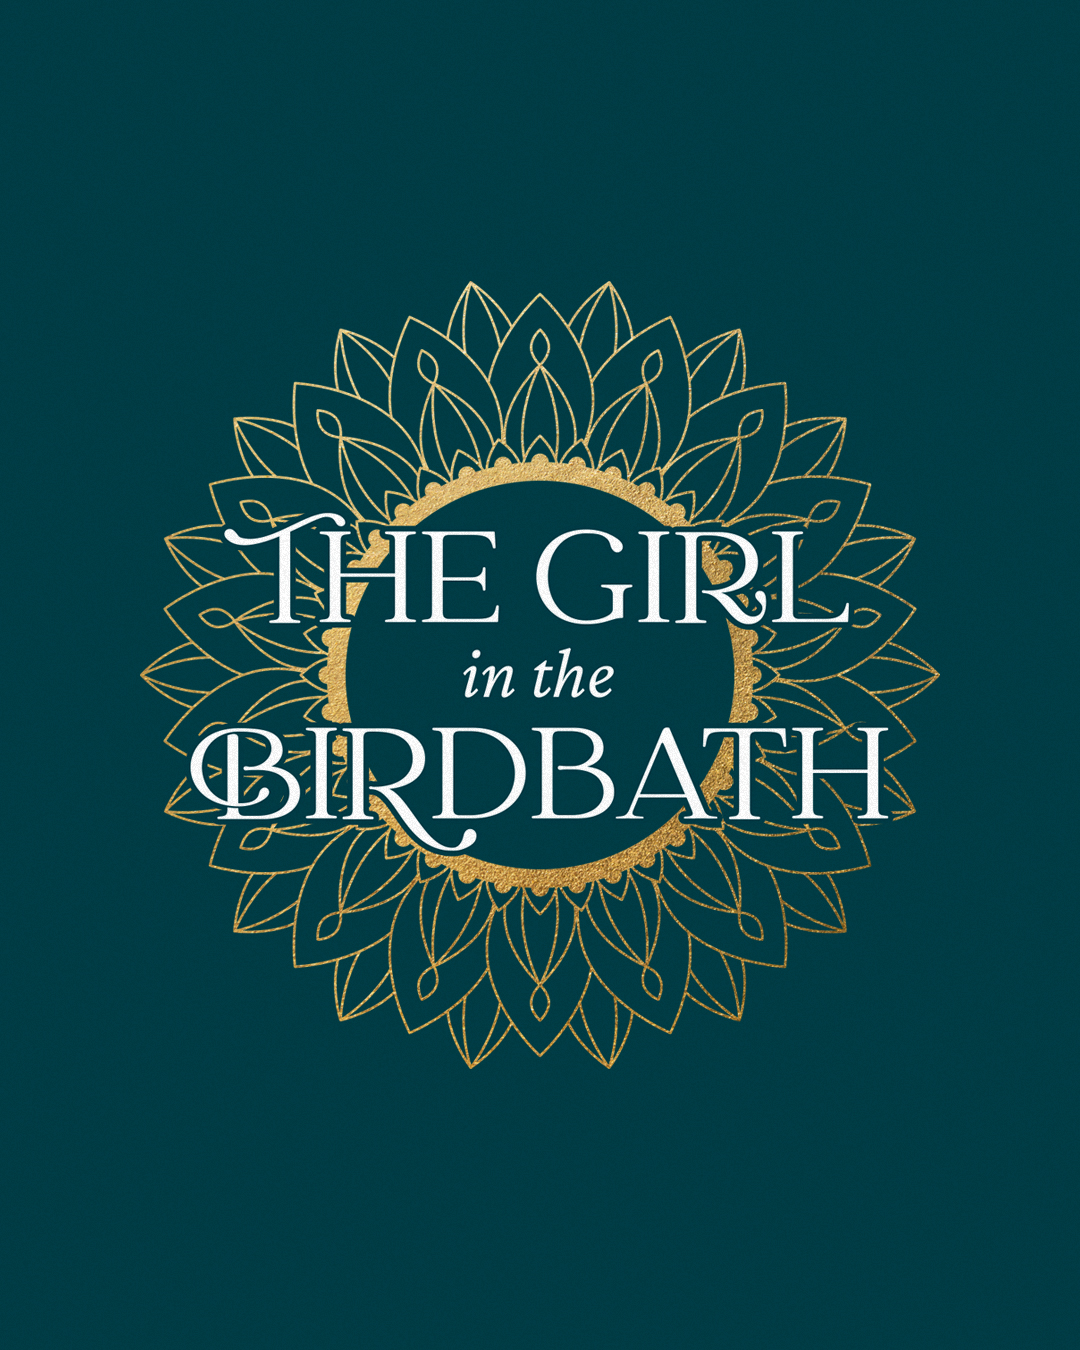 Cover illustration for Judy Spencer’s ‘The Girl in the Birdbath’